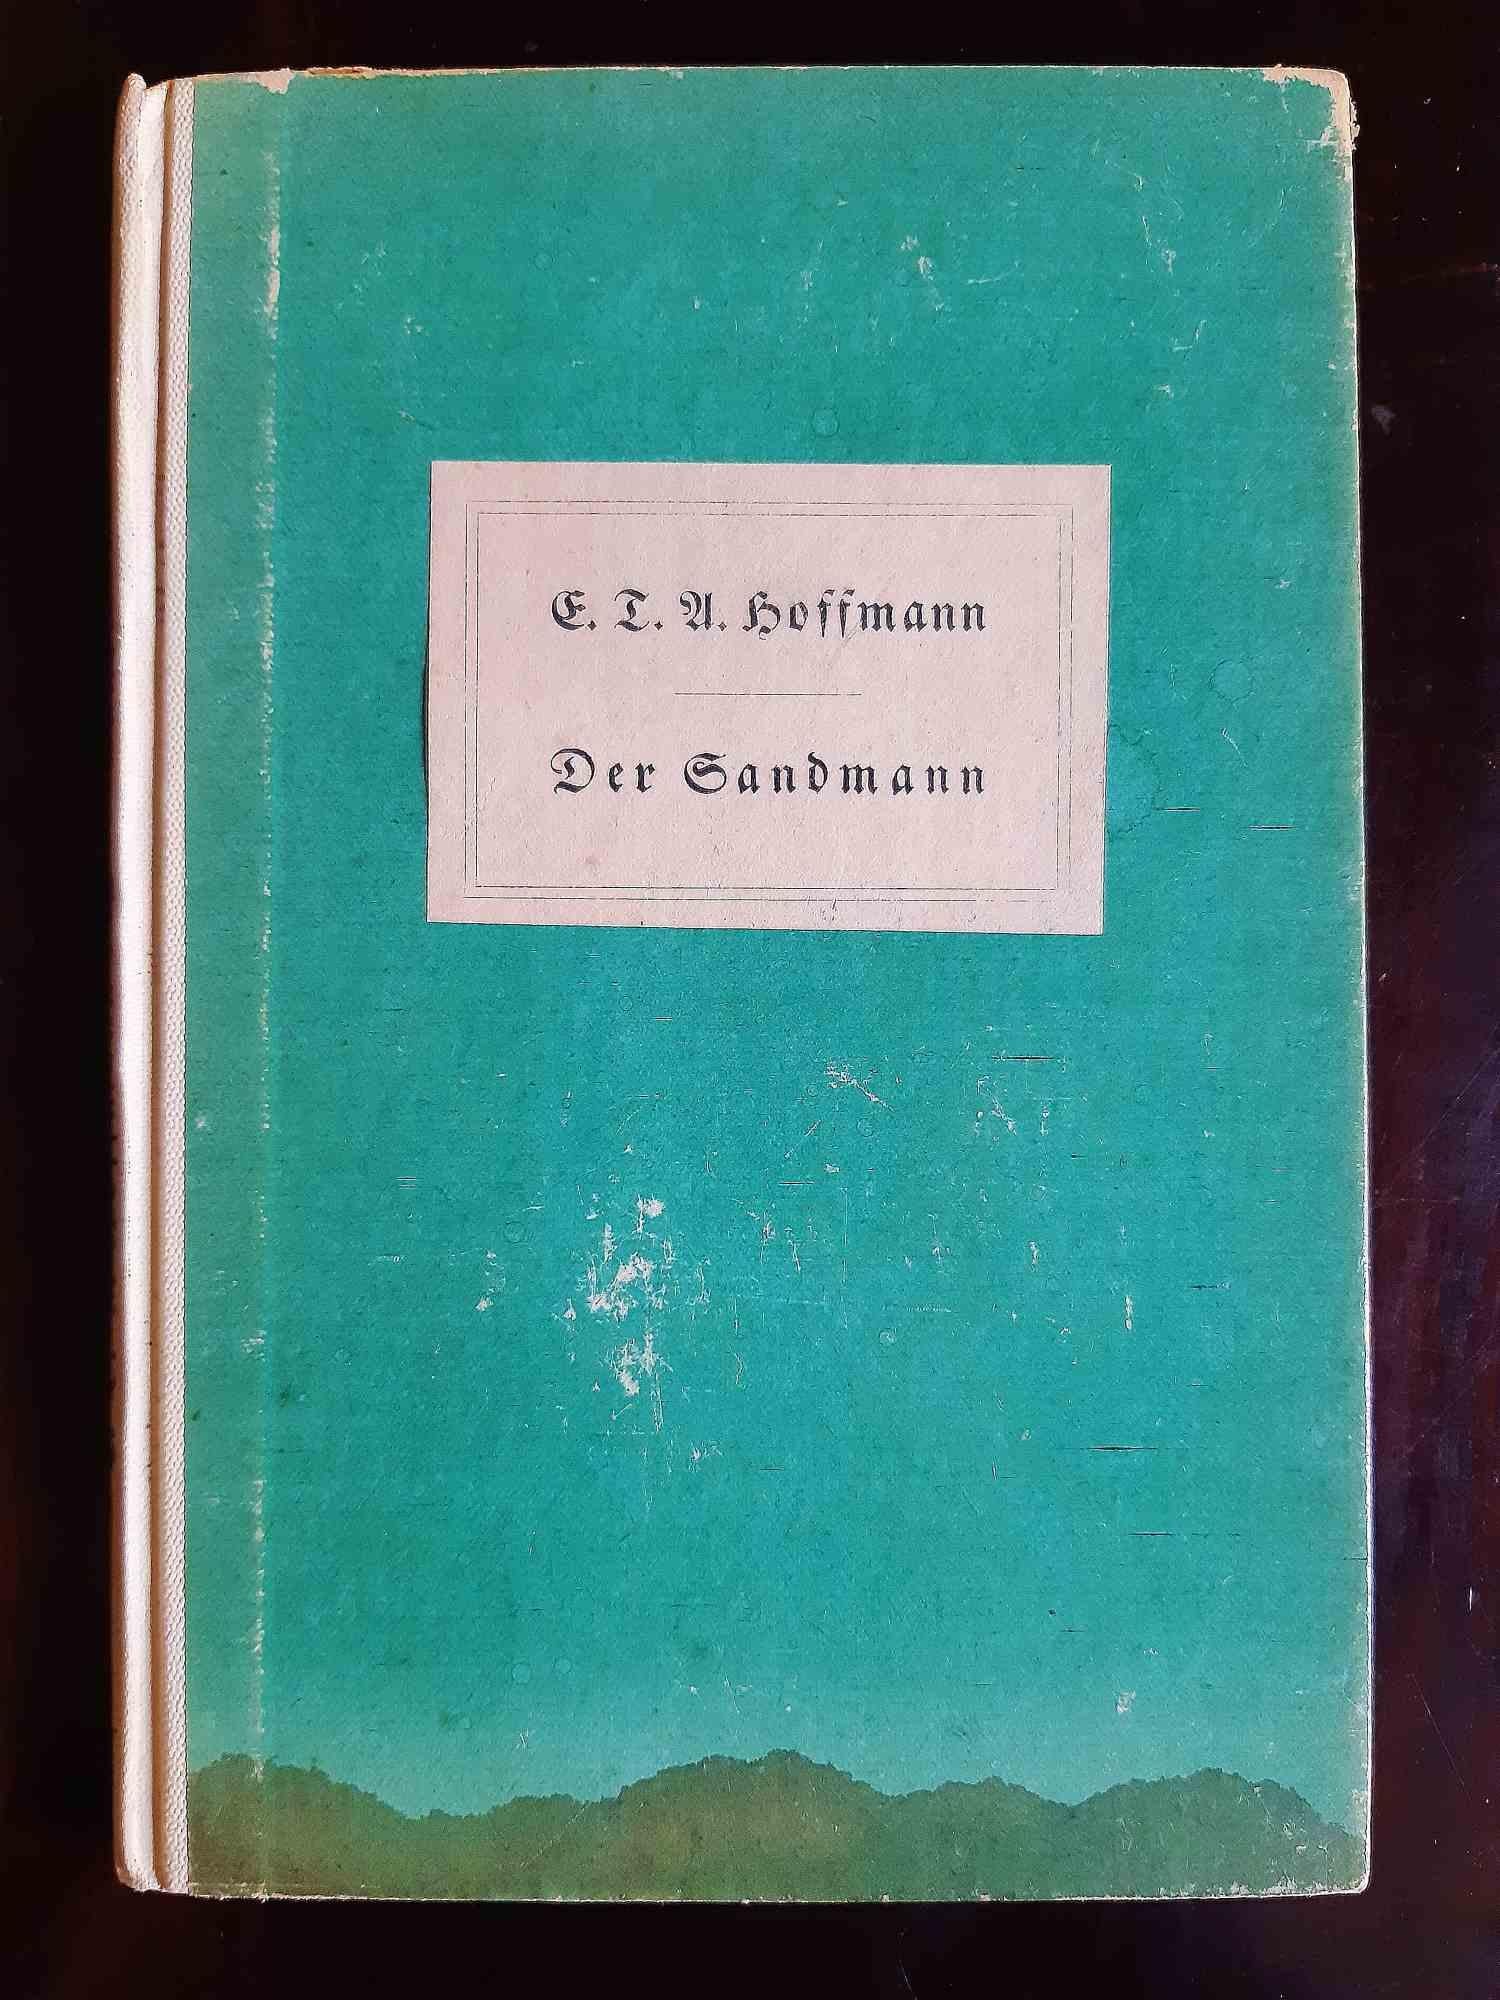 Der Sandmann is an original modern rare book written by written by Hoffmann E.T.A. and illustrated by Magnus Zeller (Biesenrode, August 9, 1888 - Berlin, February 25, 1972) in 1921.

Original First Edition.

Published by Nicolaische Verlag,